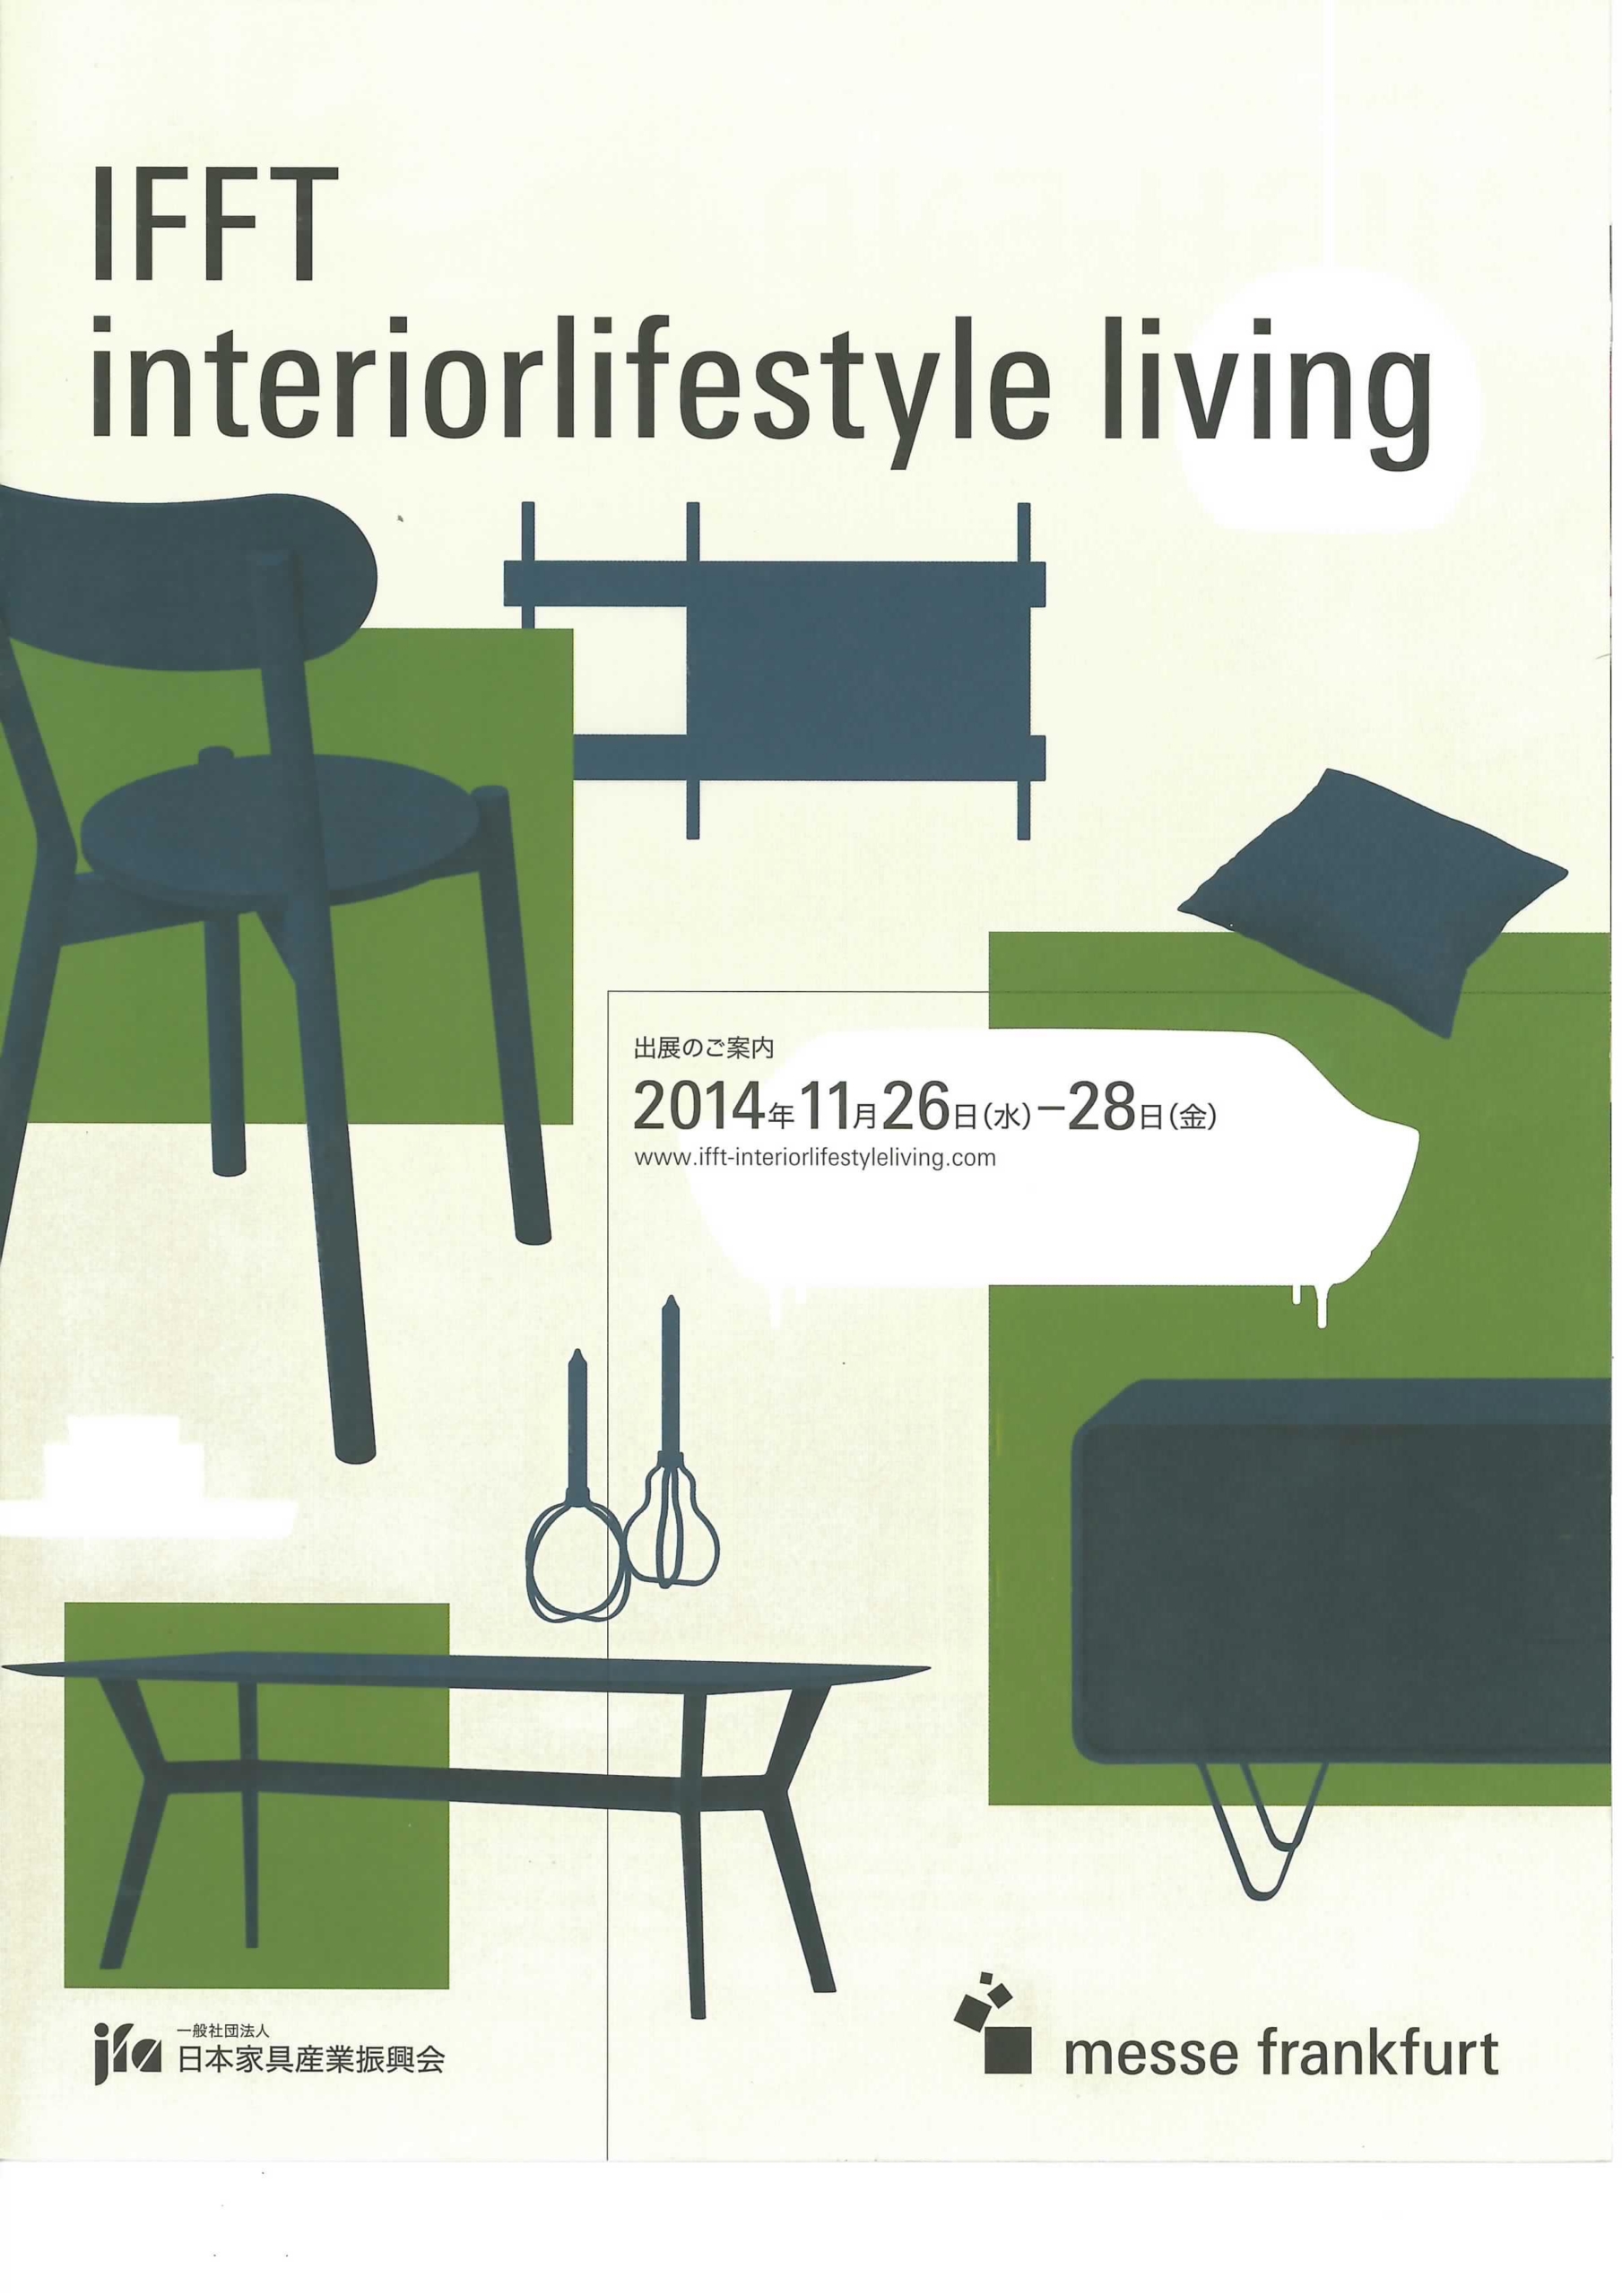 IFFT interiorlifestyle living に出展いたします